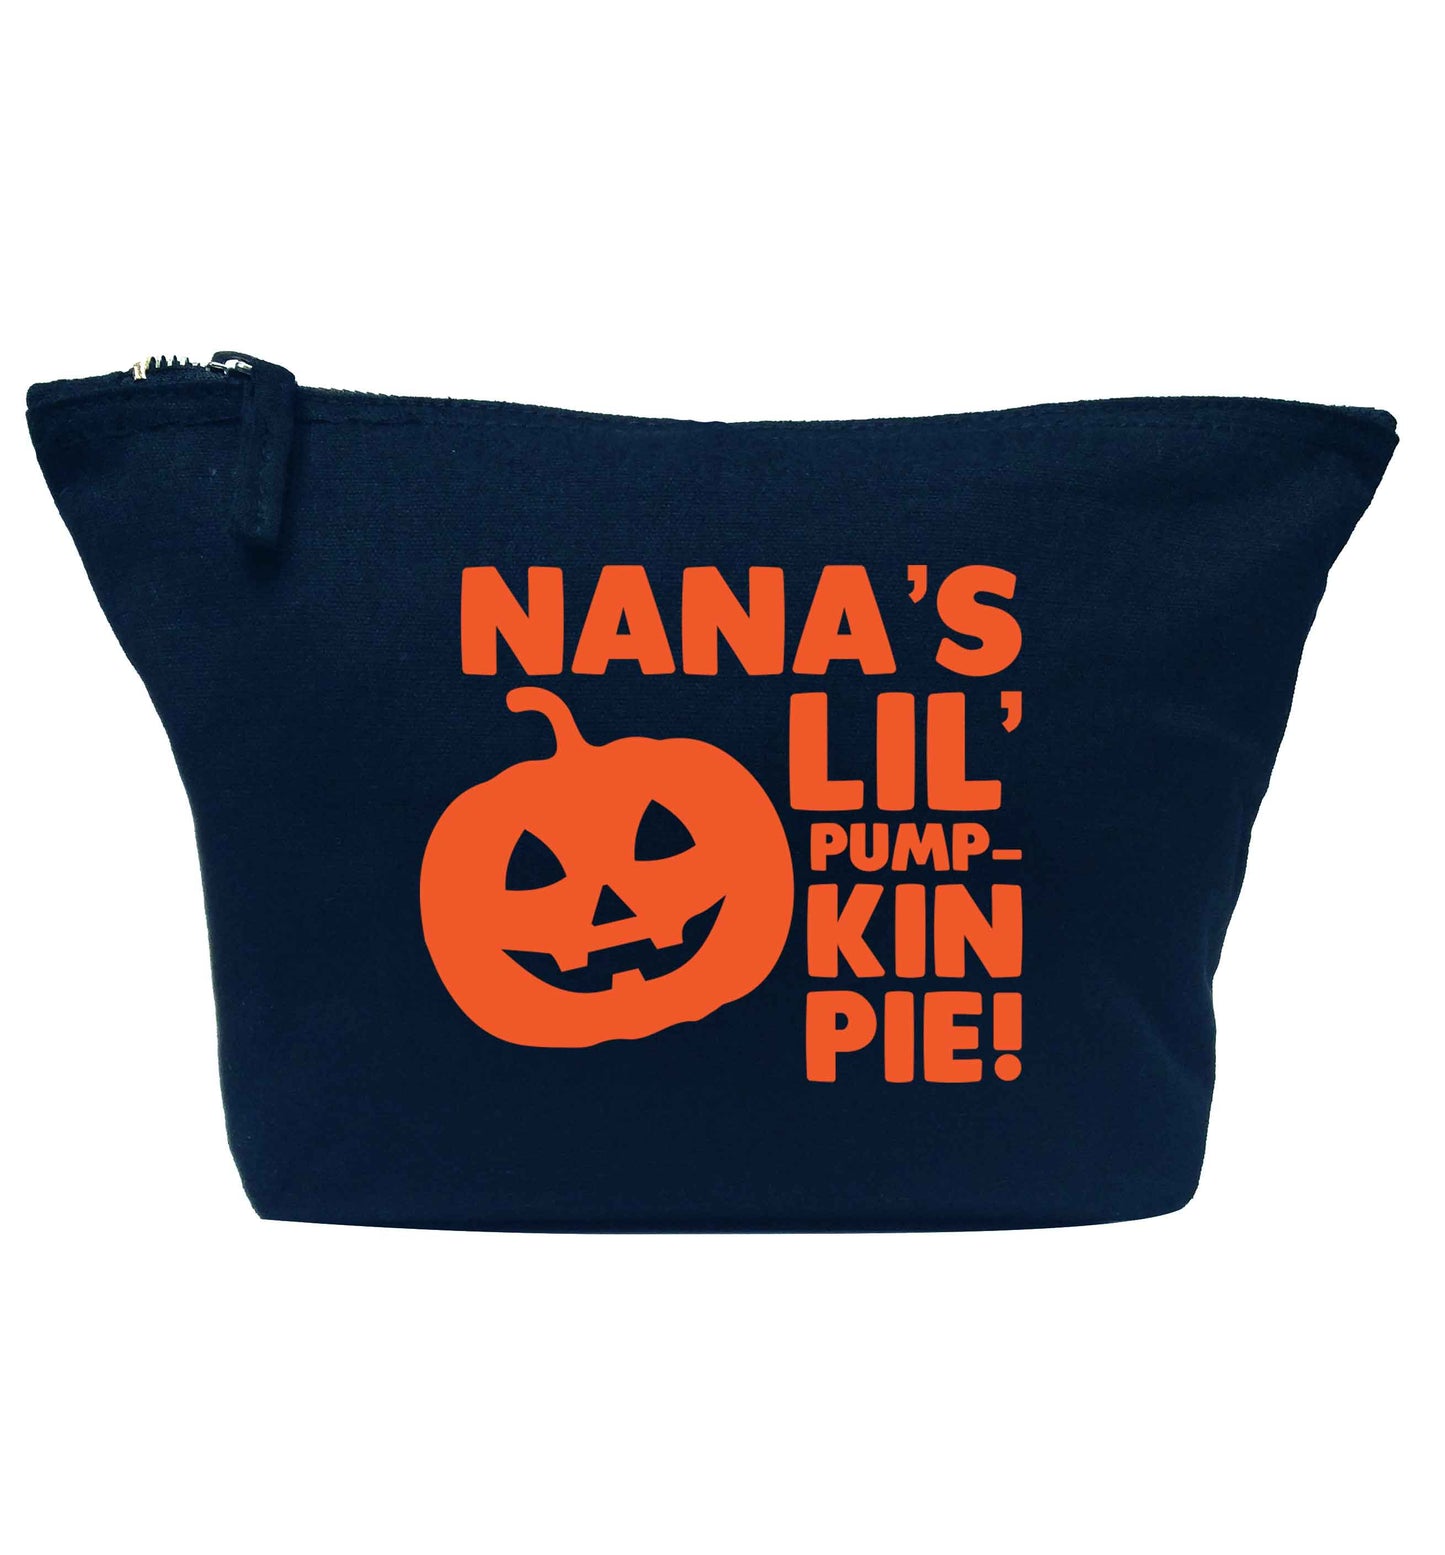 Nana's lil' pumpkin pie navy makeup bag